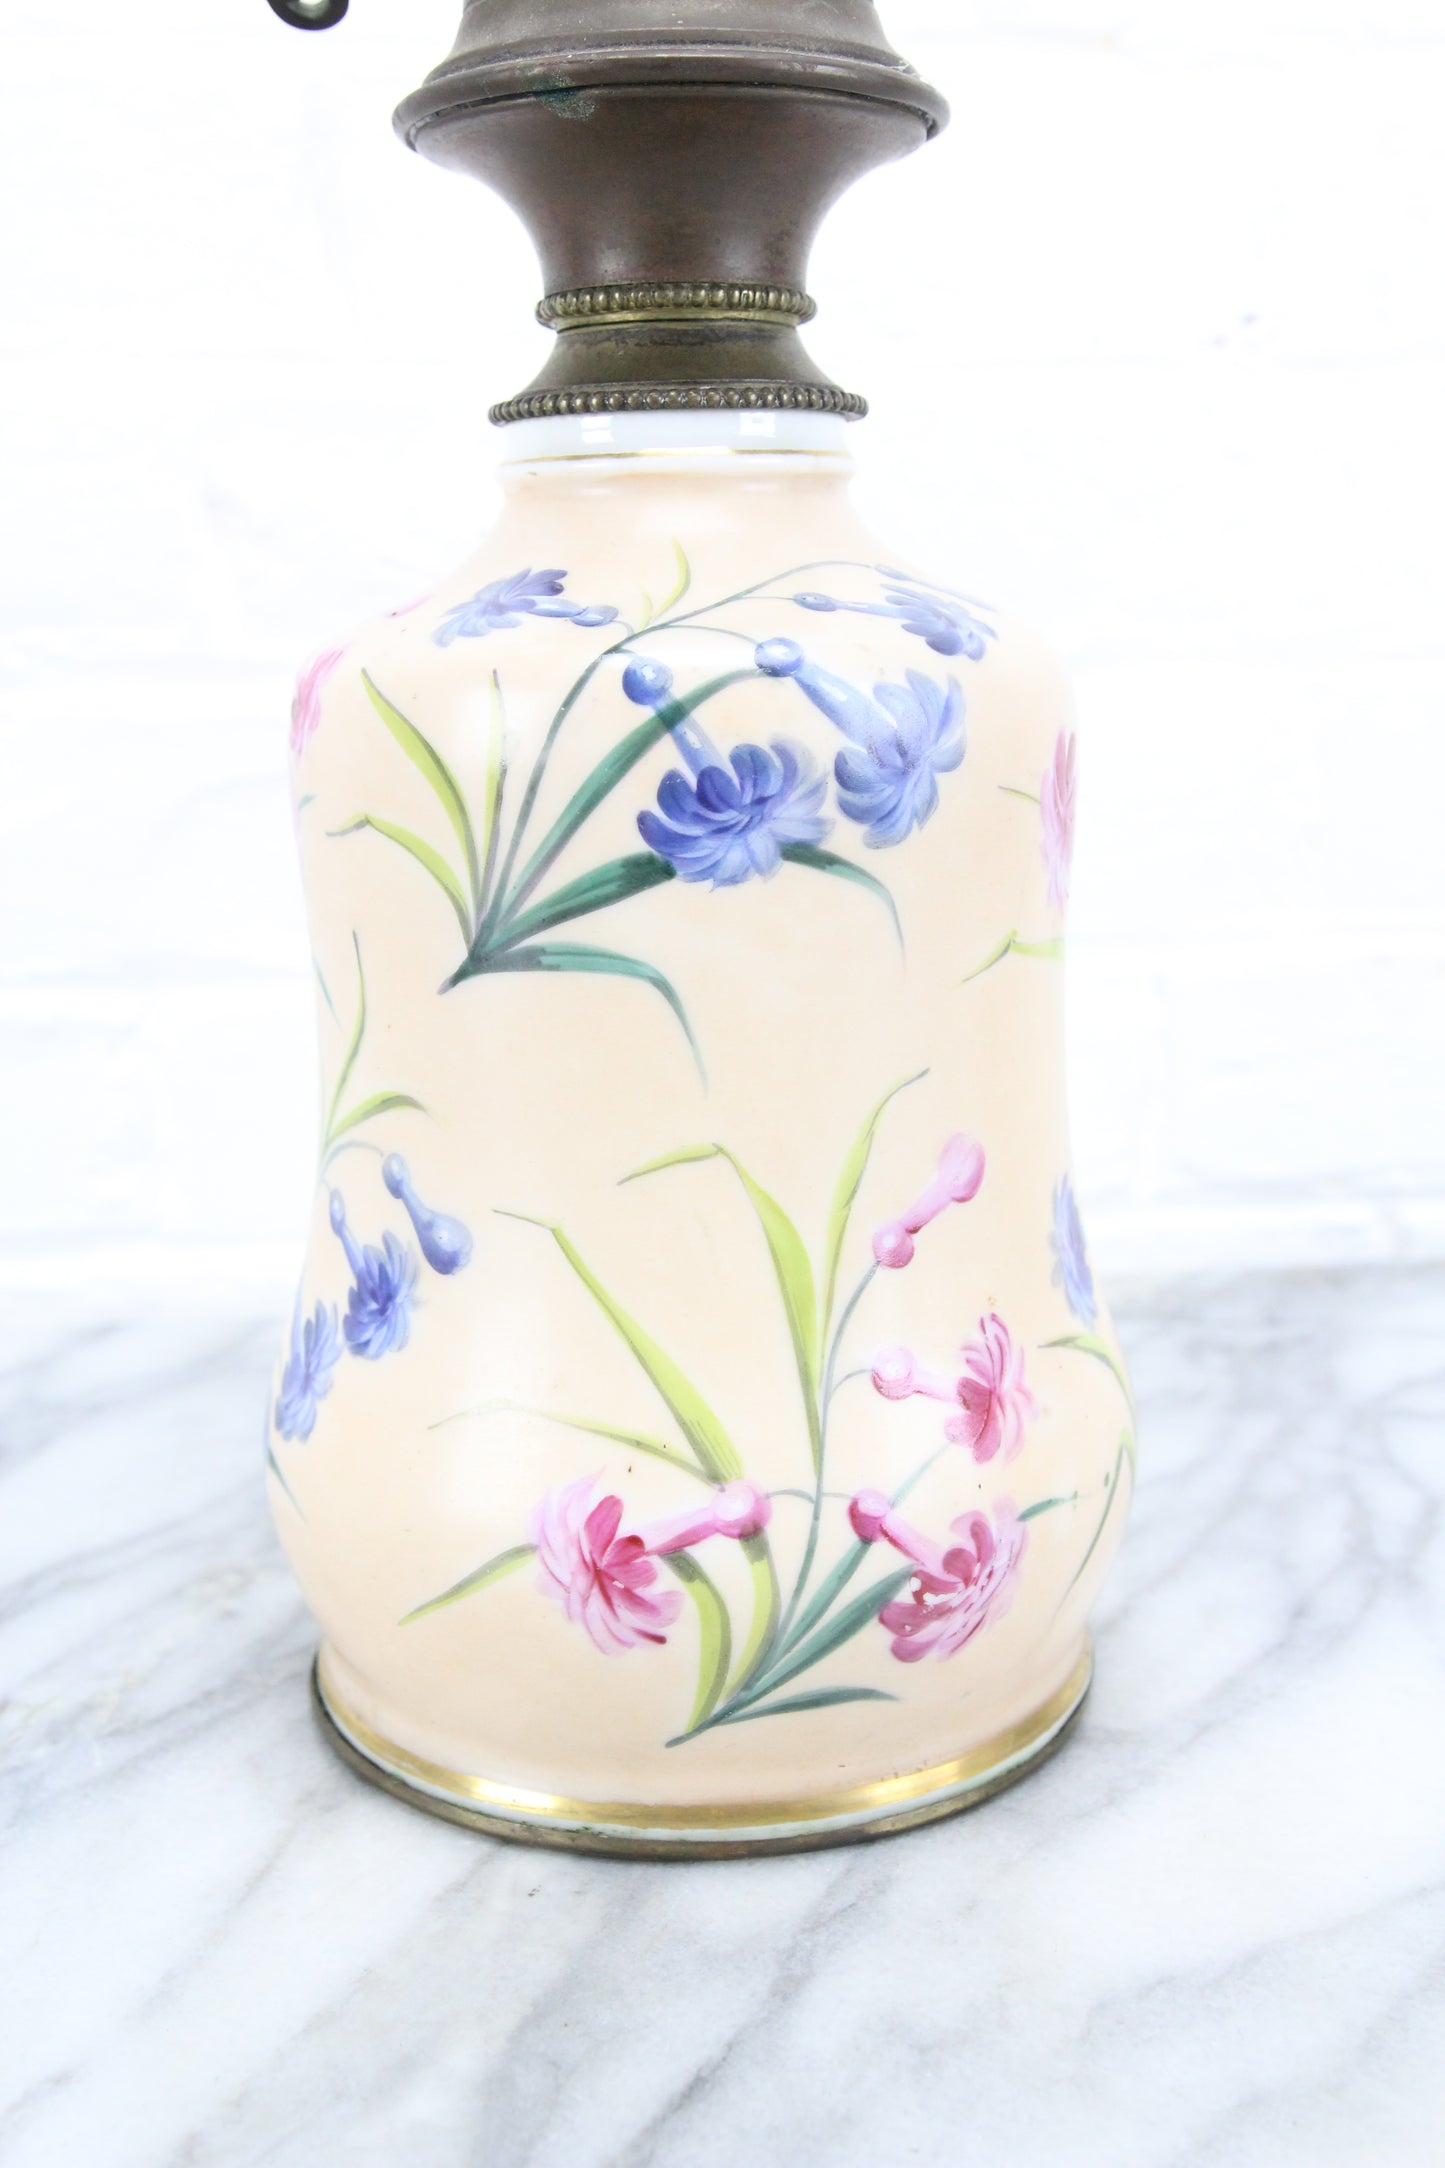 Antique French Kerosene Oil Lamp with Painted Flowers on Ceramic Base